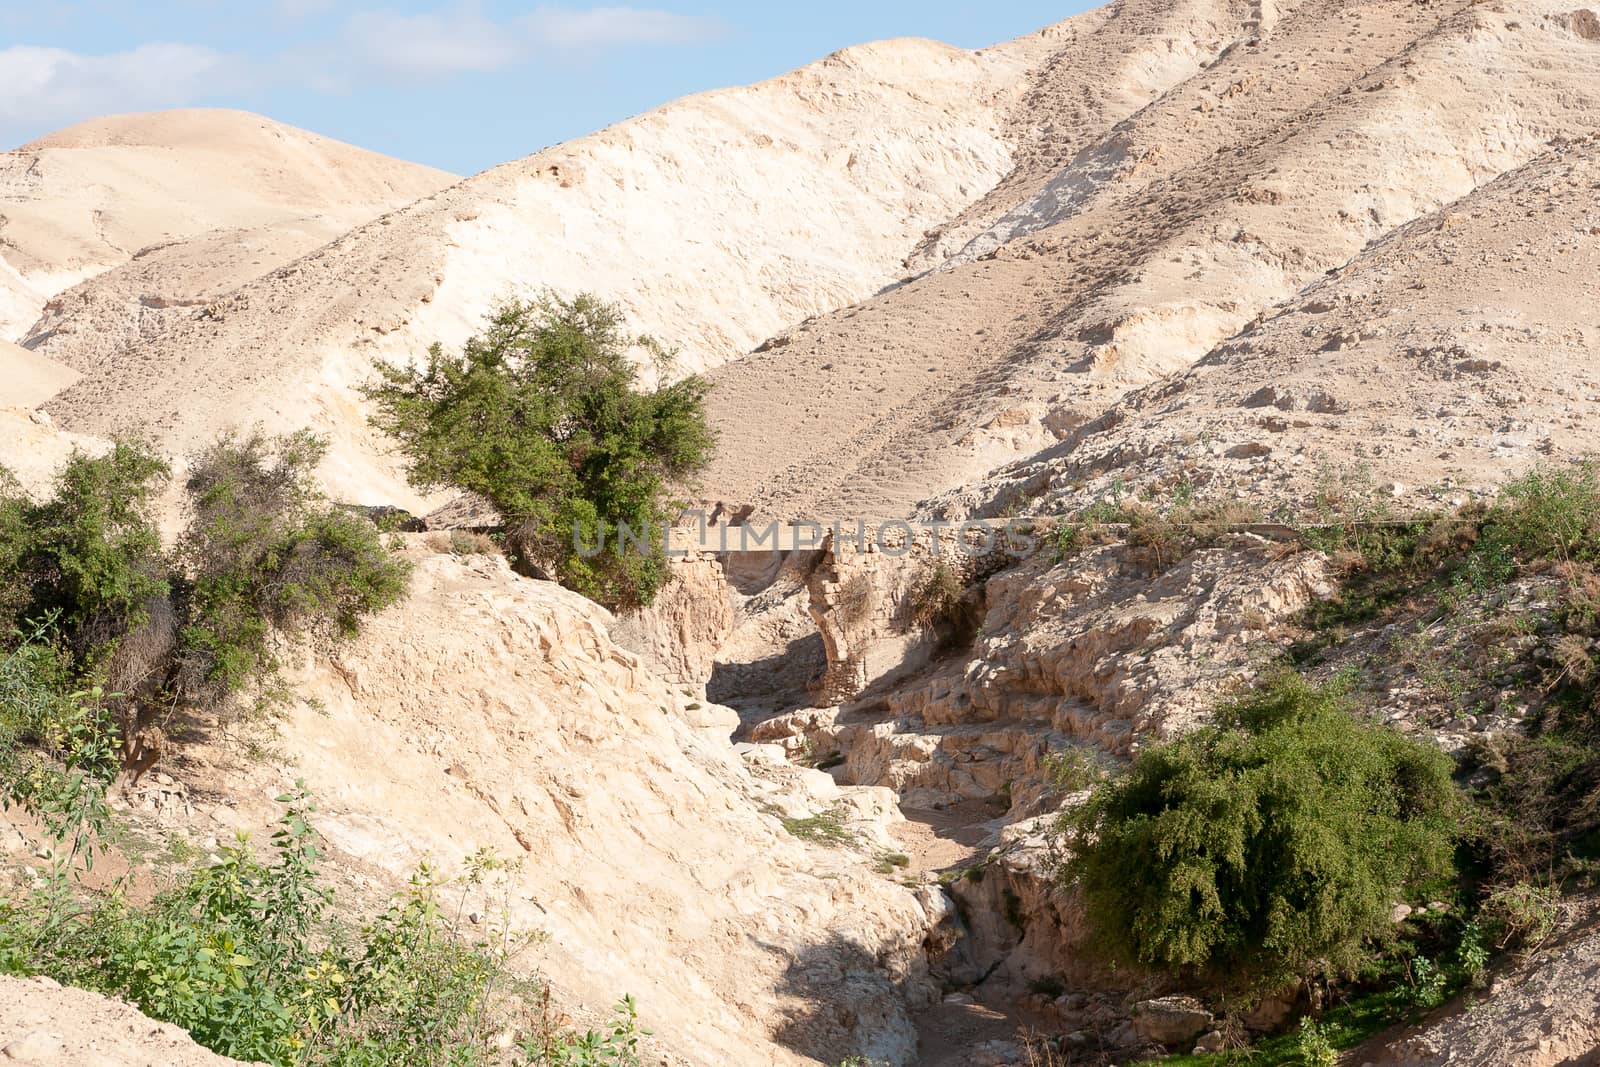 Hiking in judean desert by javax